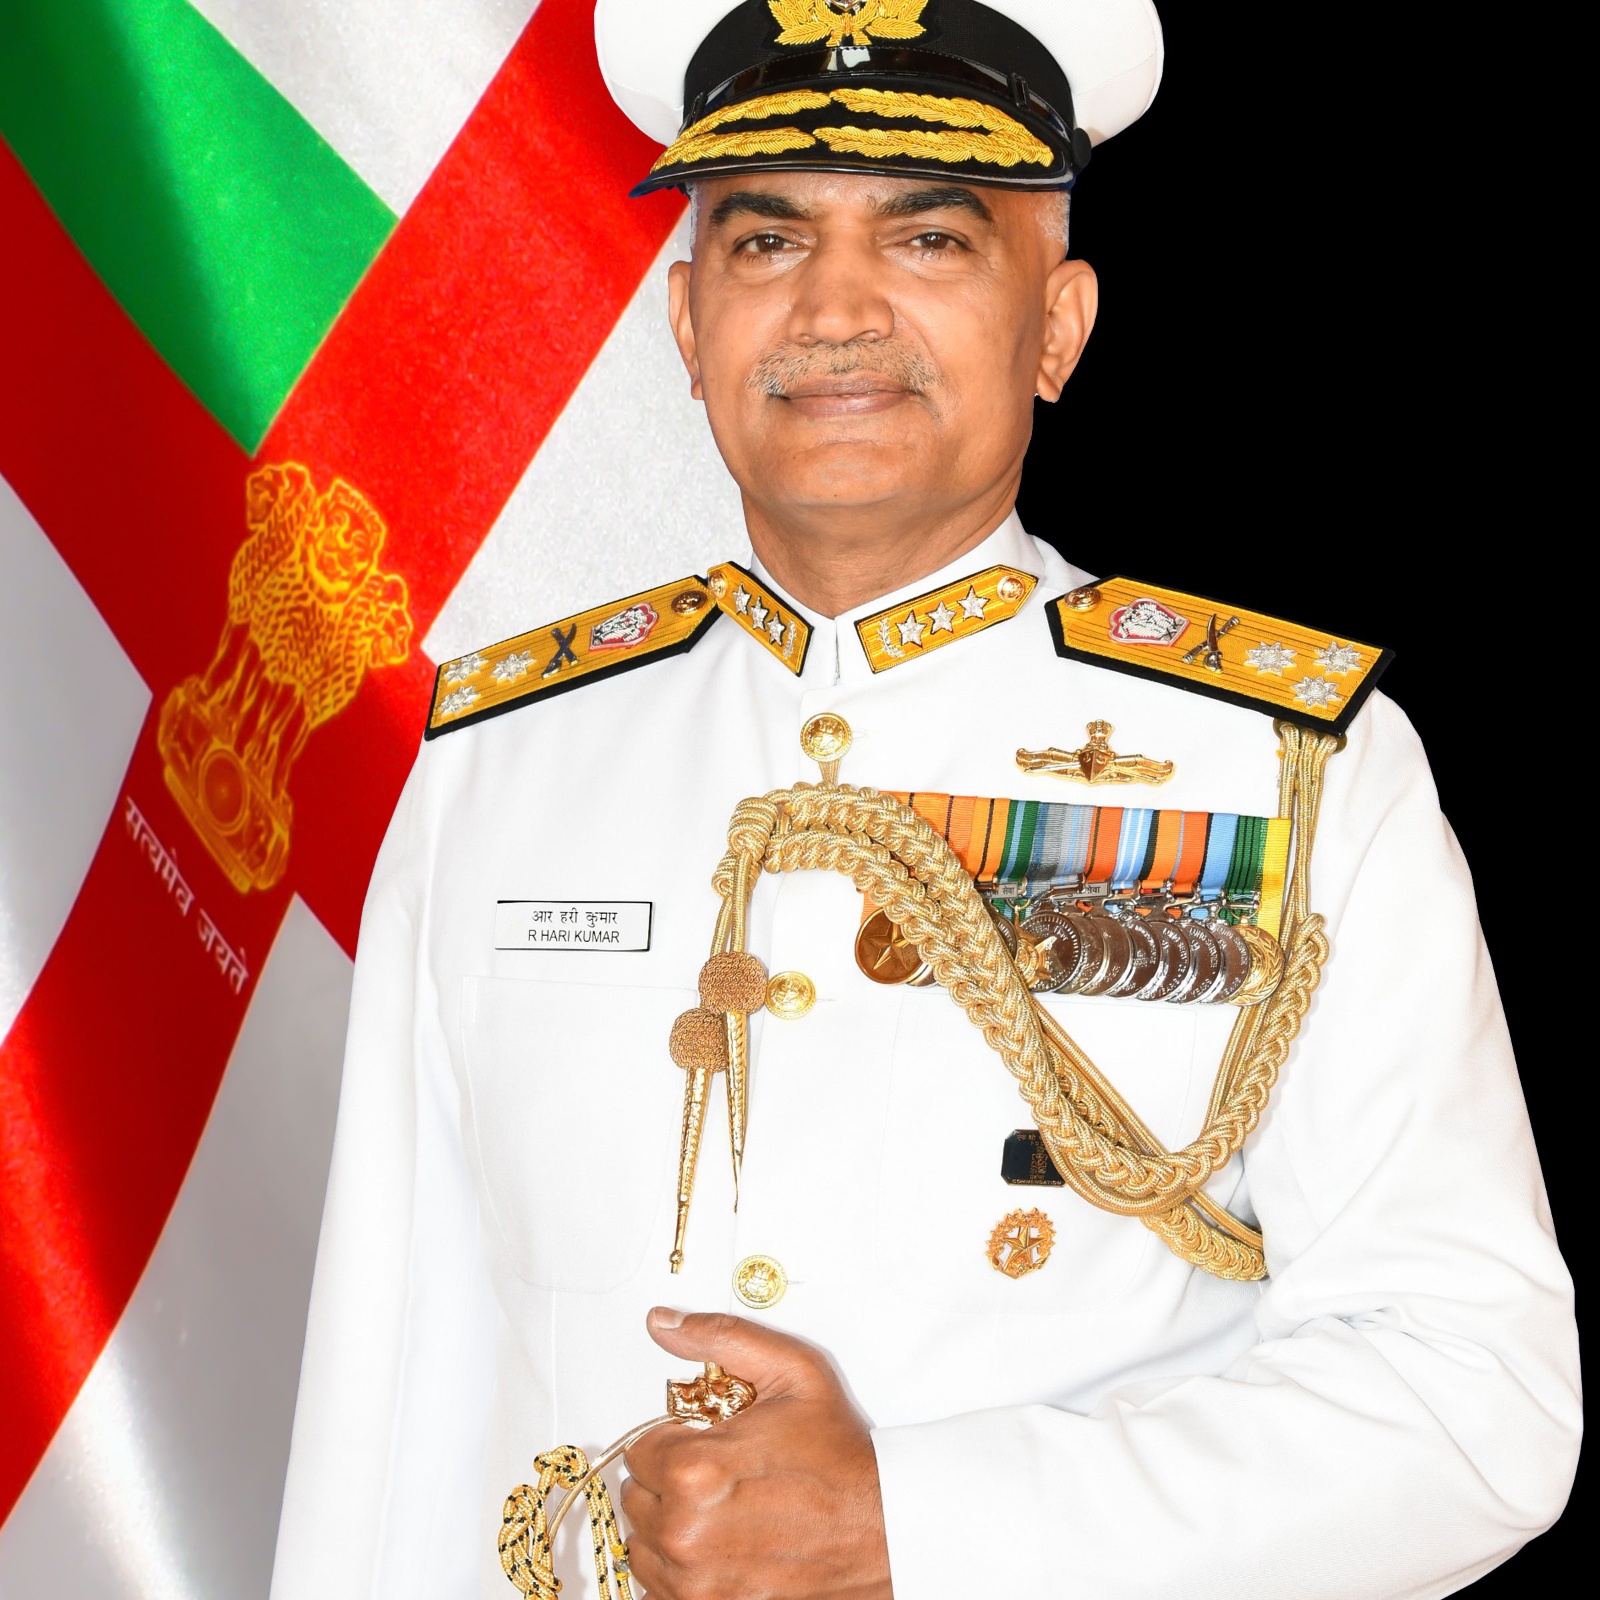 Vice Admiral R Hari Kumar to Be Next Chief of Naval Staff - वाइस एडमिरल आर  हरि कुमार नौसेना प्रमुख बनाए गए, 30 नवंबर को रिटायर हो रहे वर्तमान नेवल चीफ  – News18 हिंदी